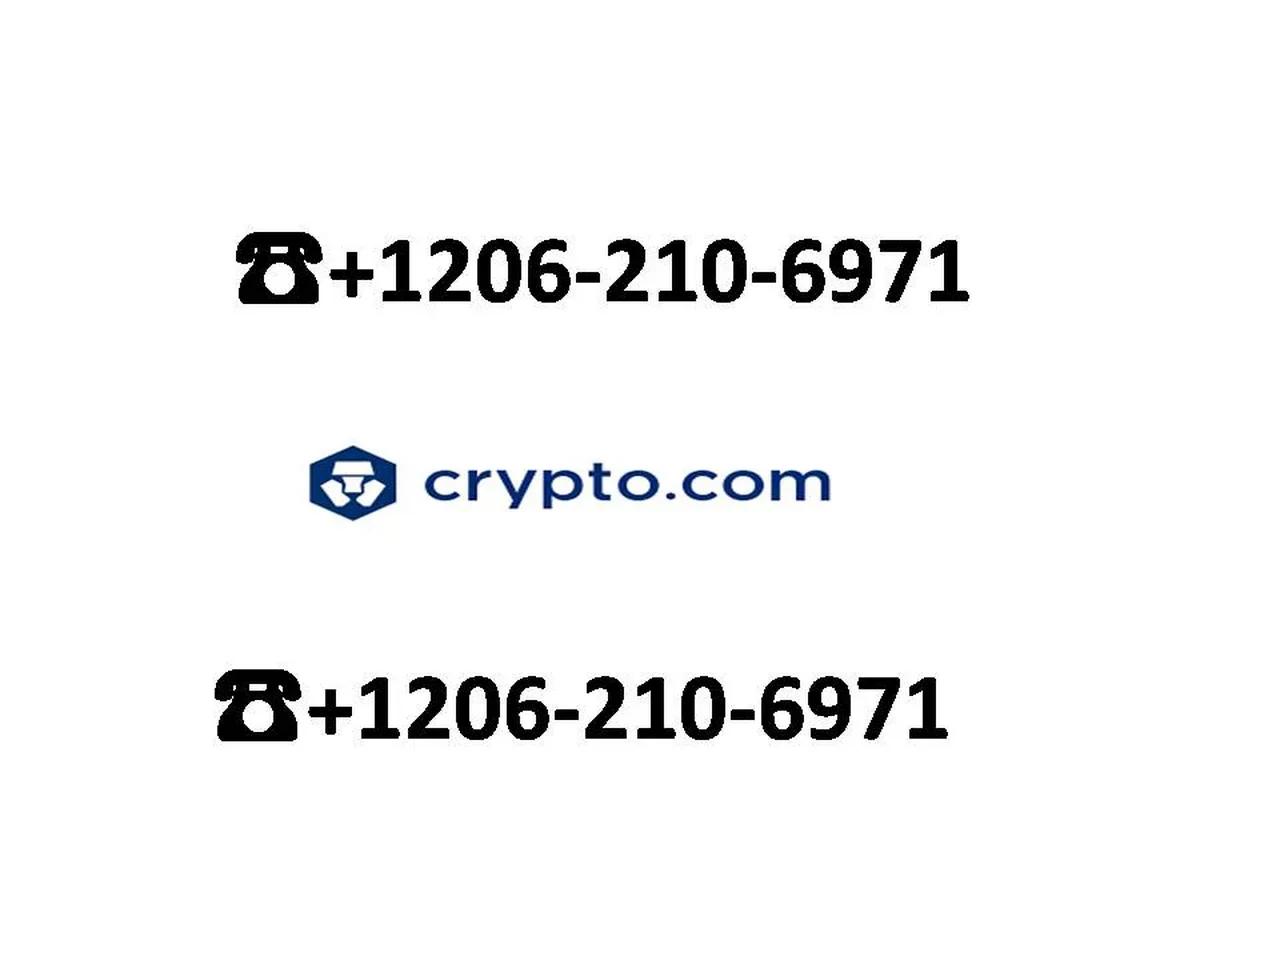 crypto.com.customer service